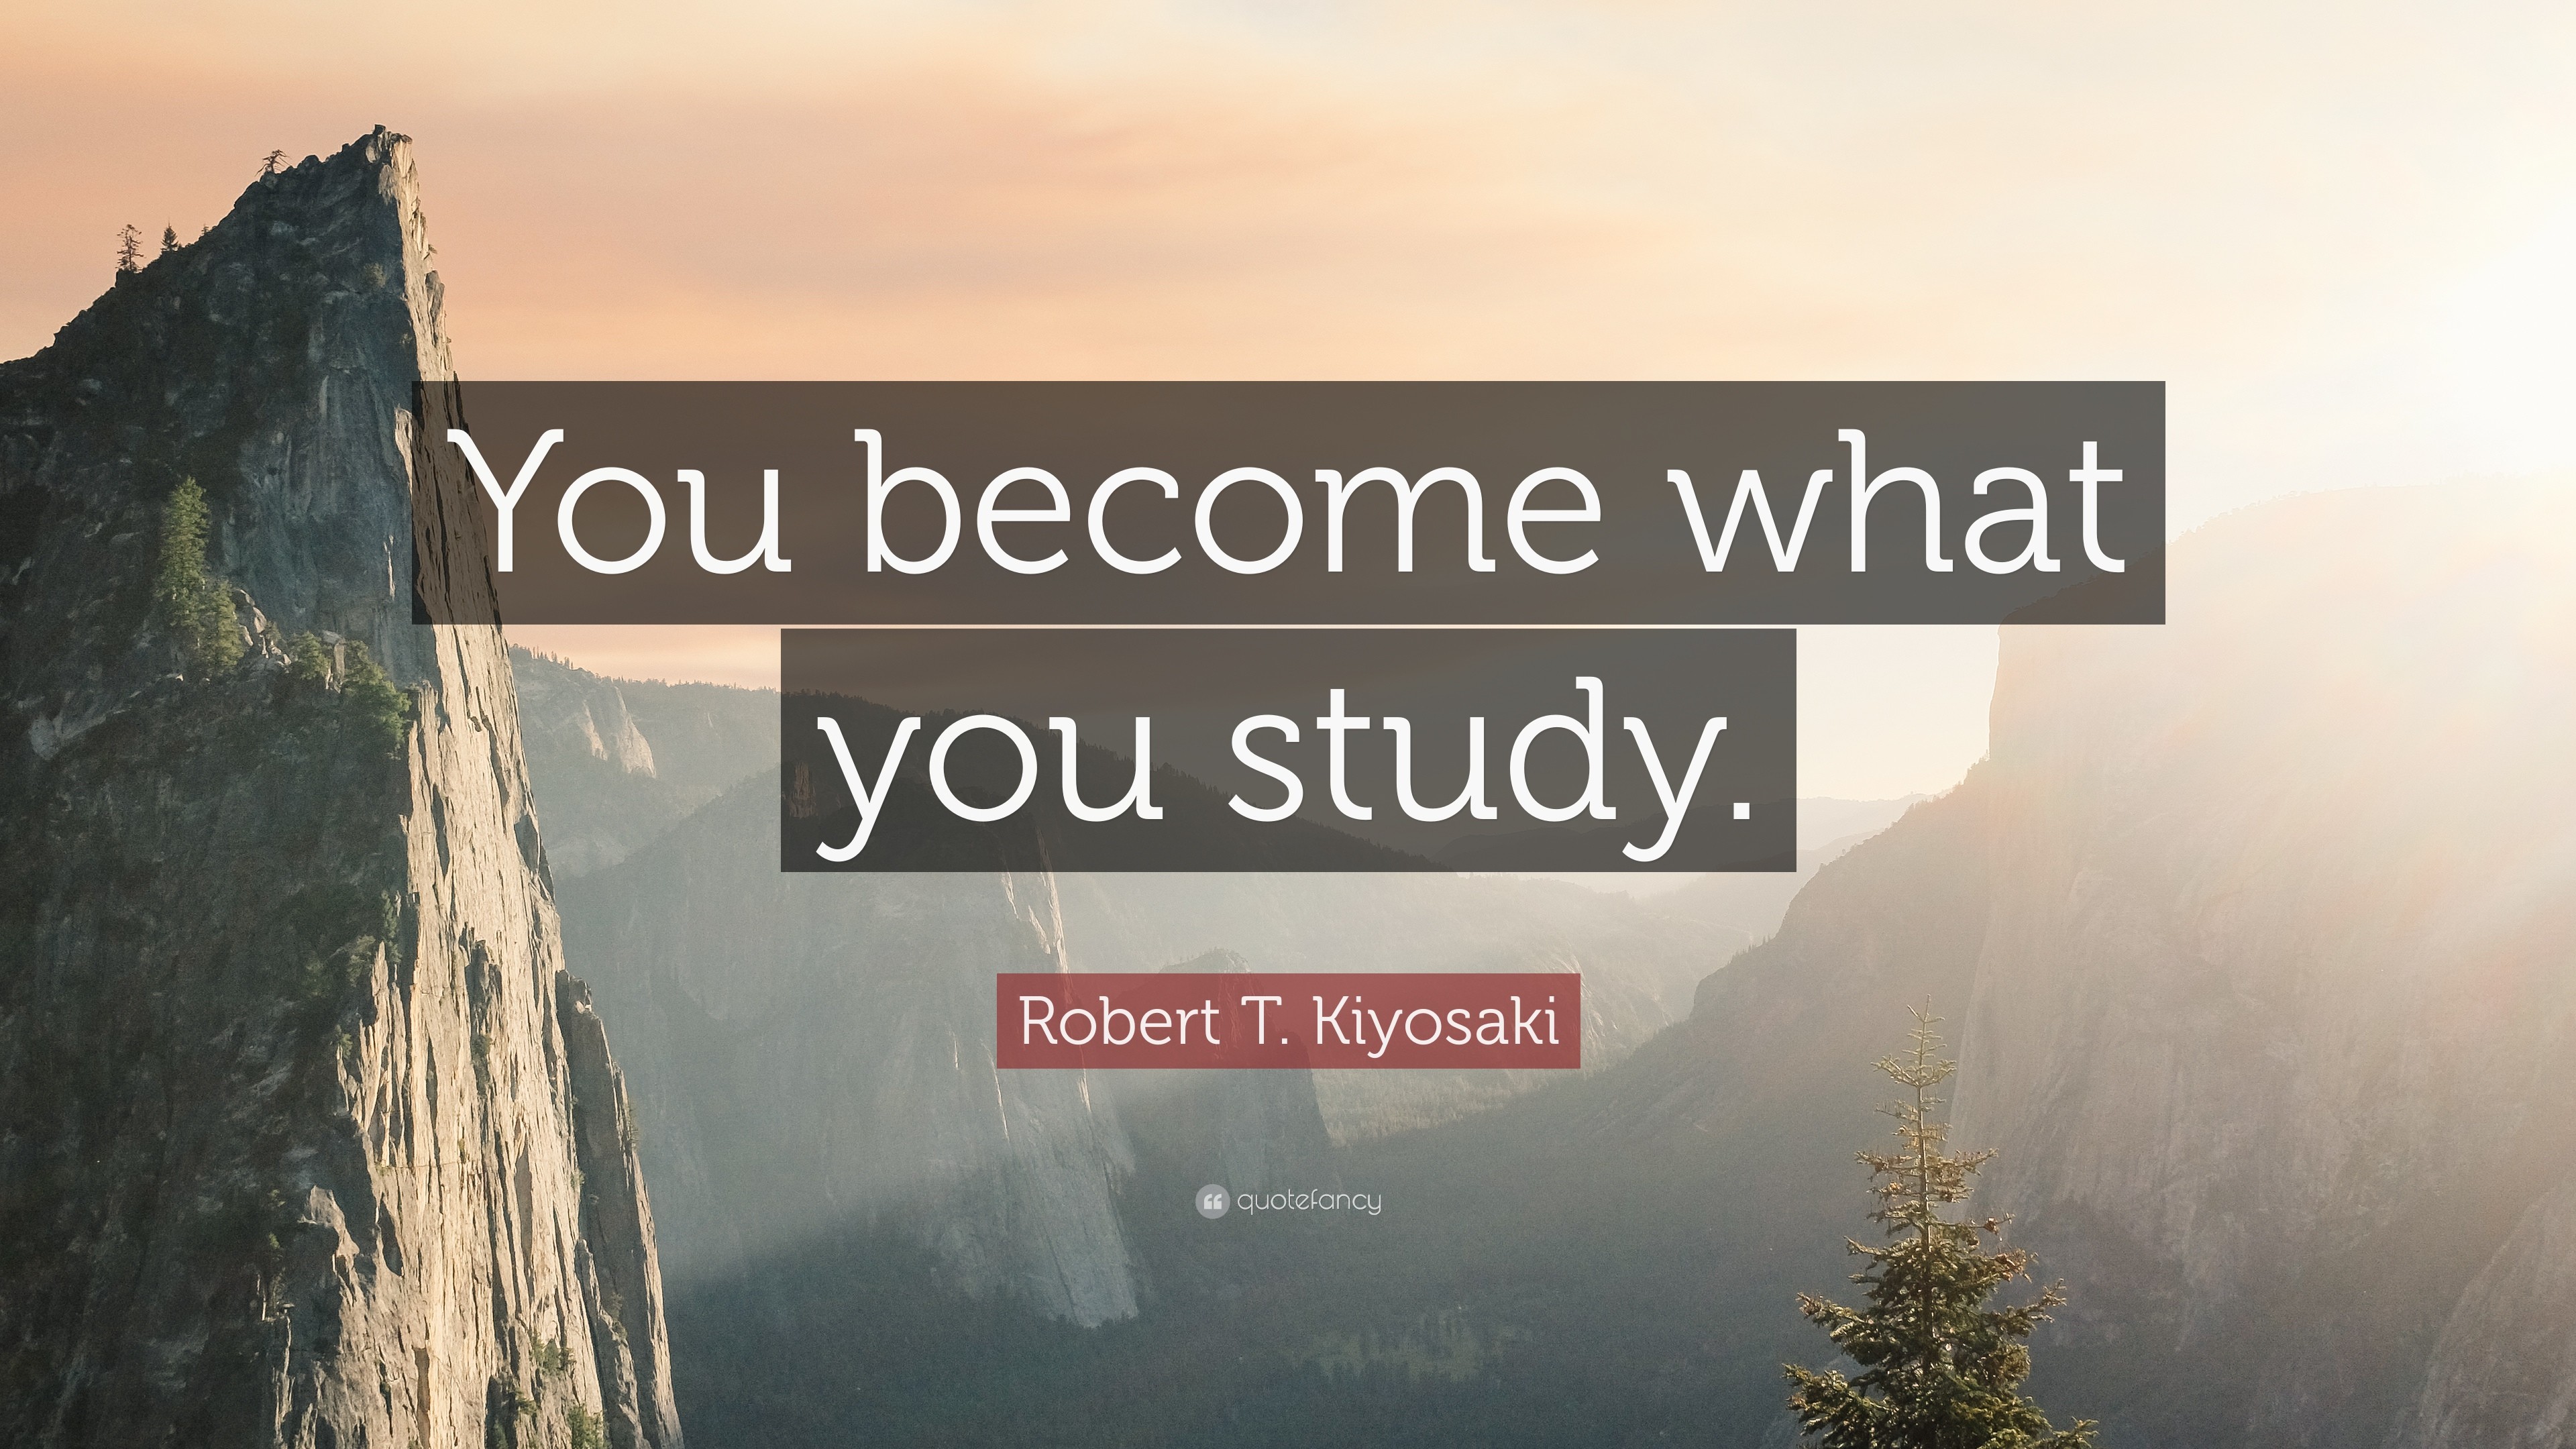 3840x2160 Study Quotes: “You become what you study.” — Robert T. Kiyosaki